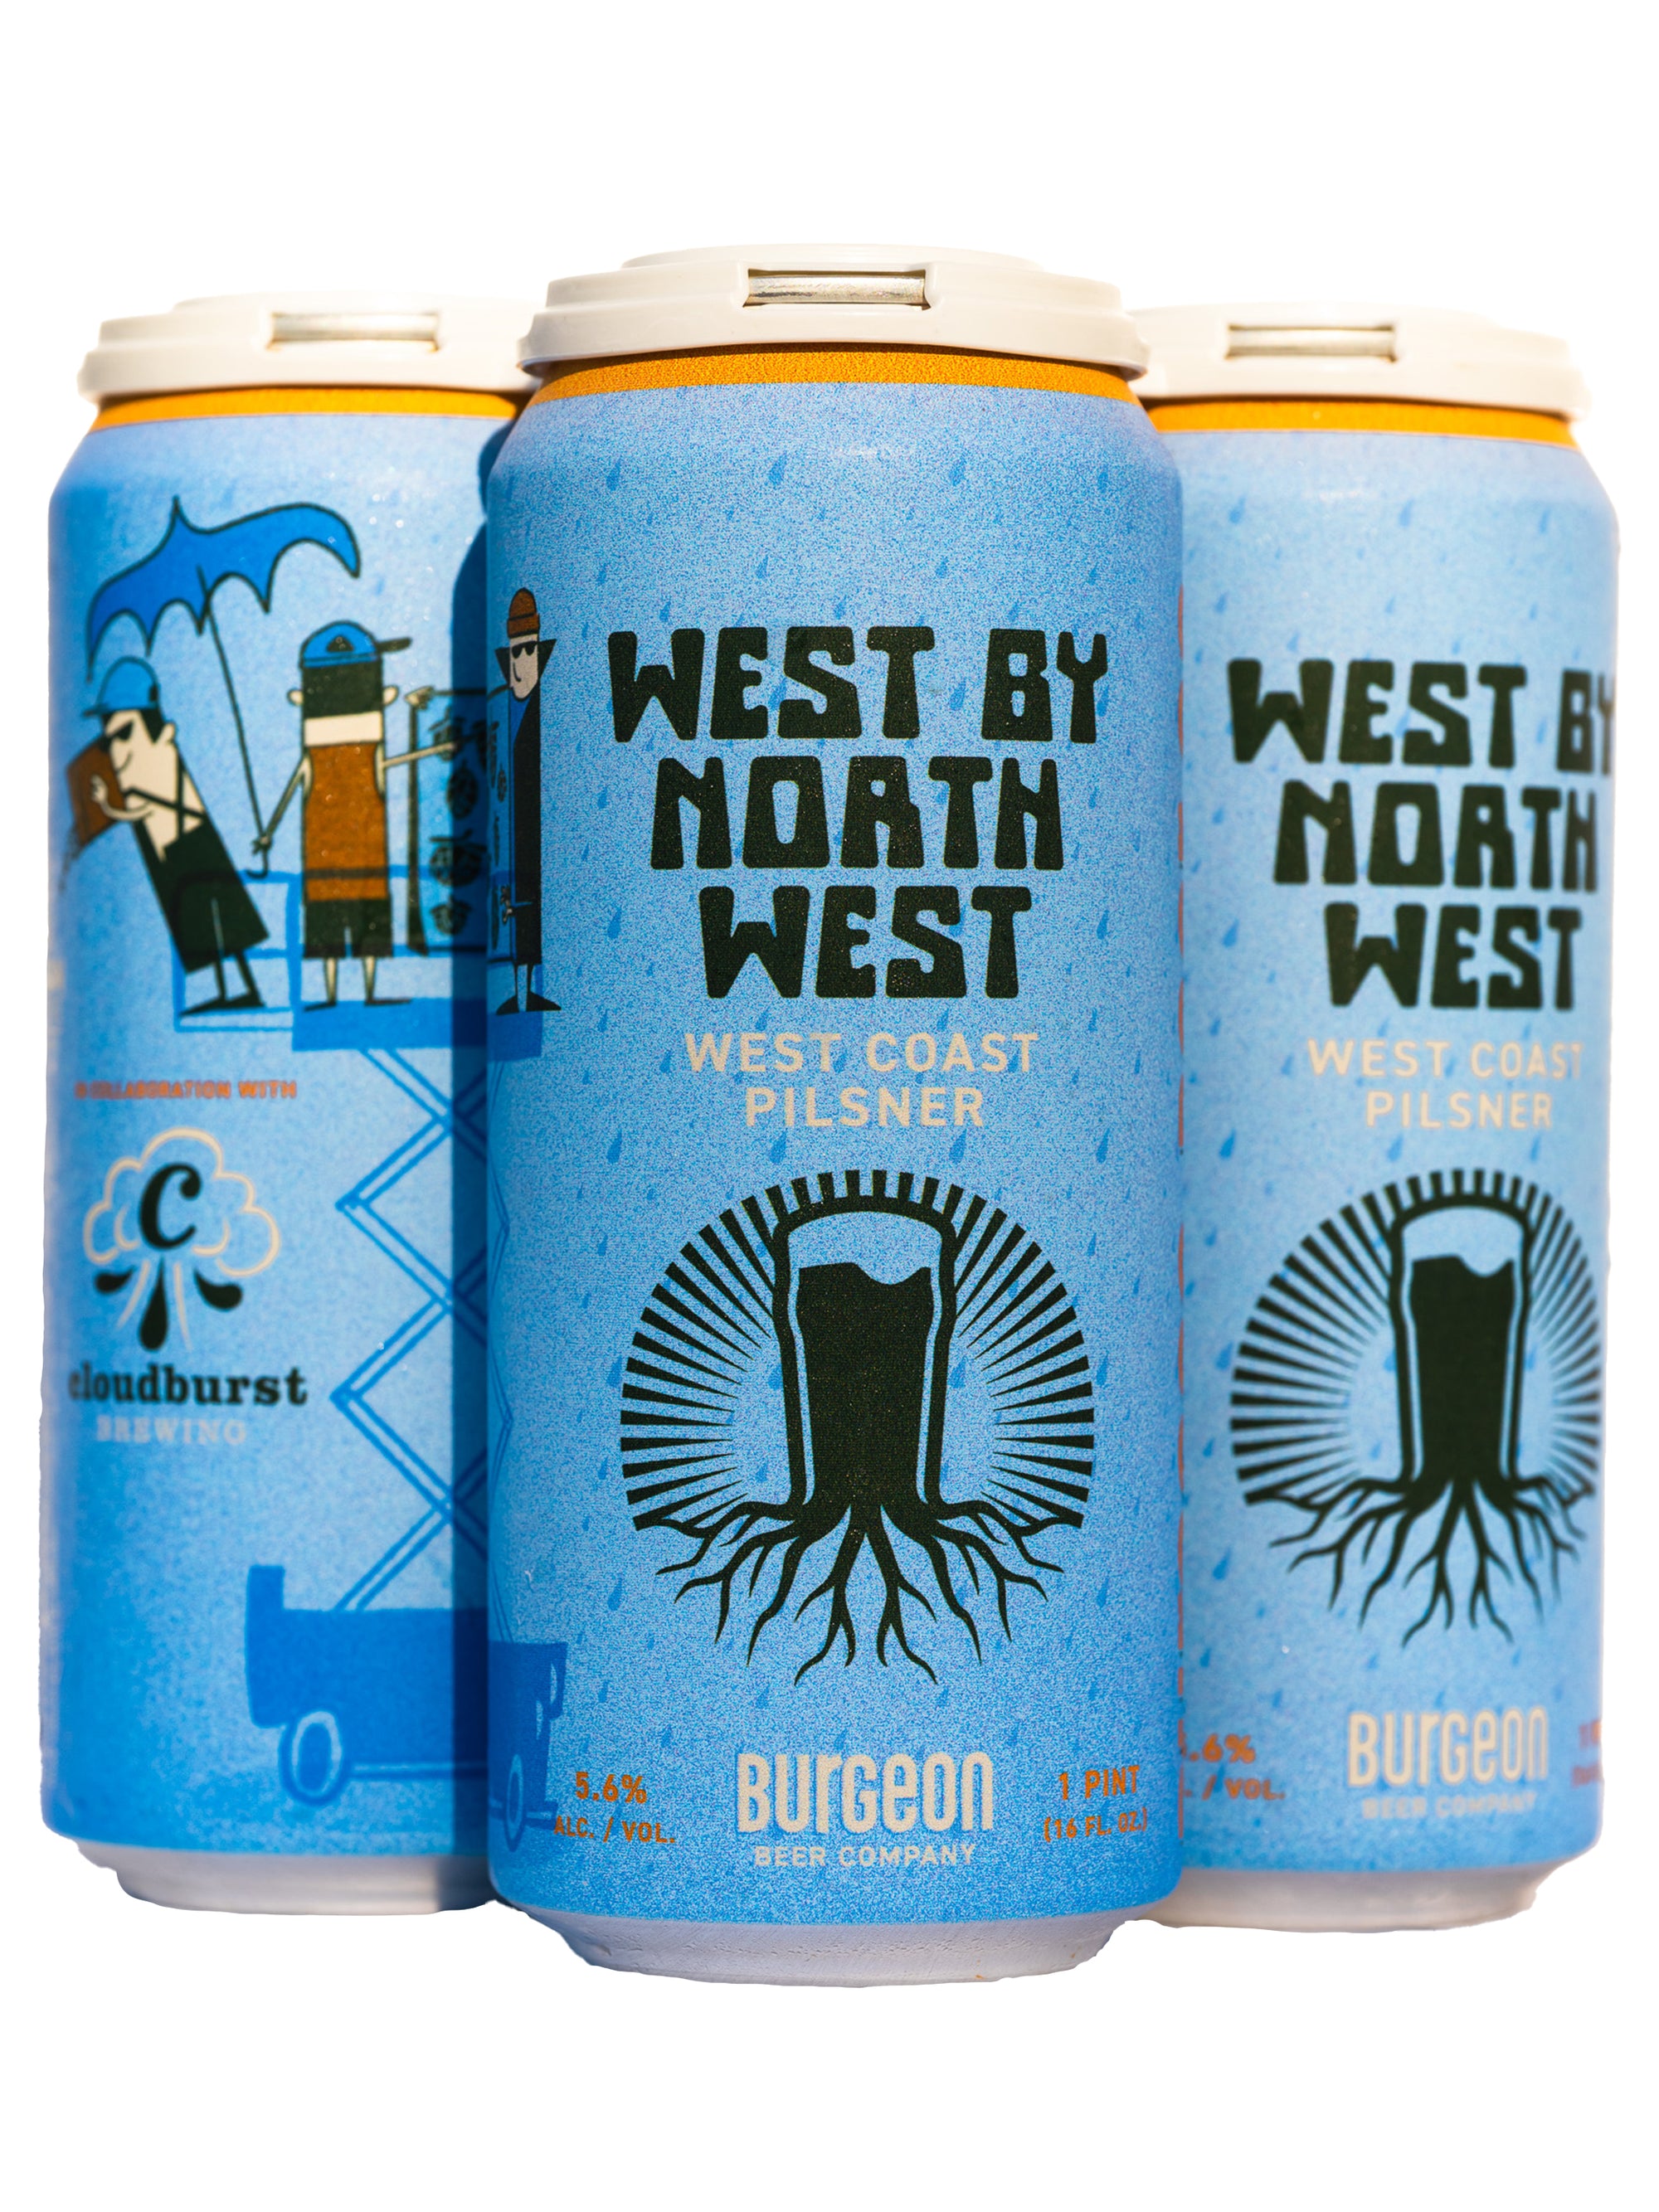 West by Northwest West Coast Pilsner collab w/ Cloudburst - 4 Pack